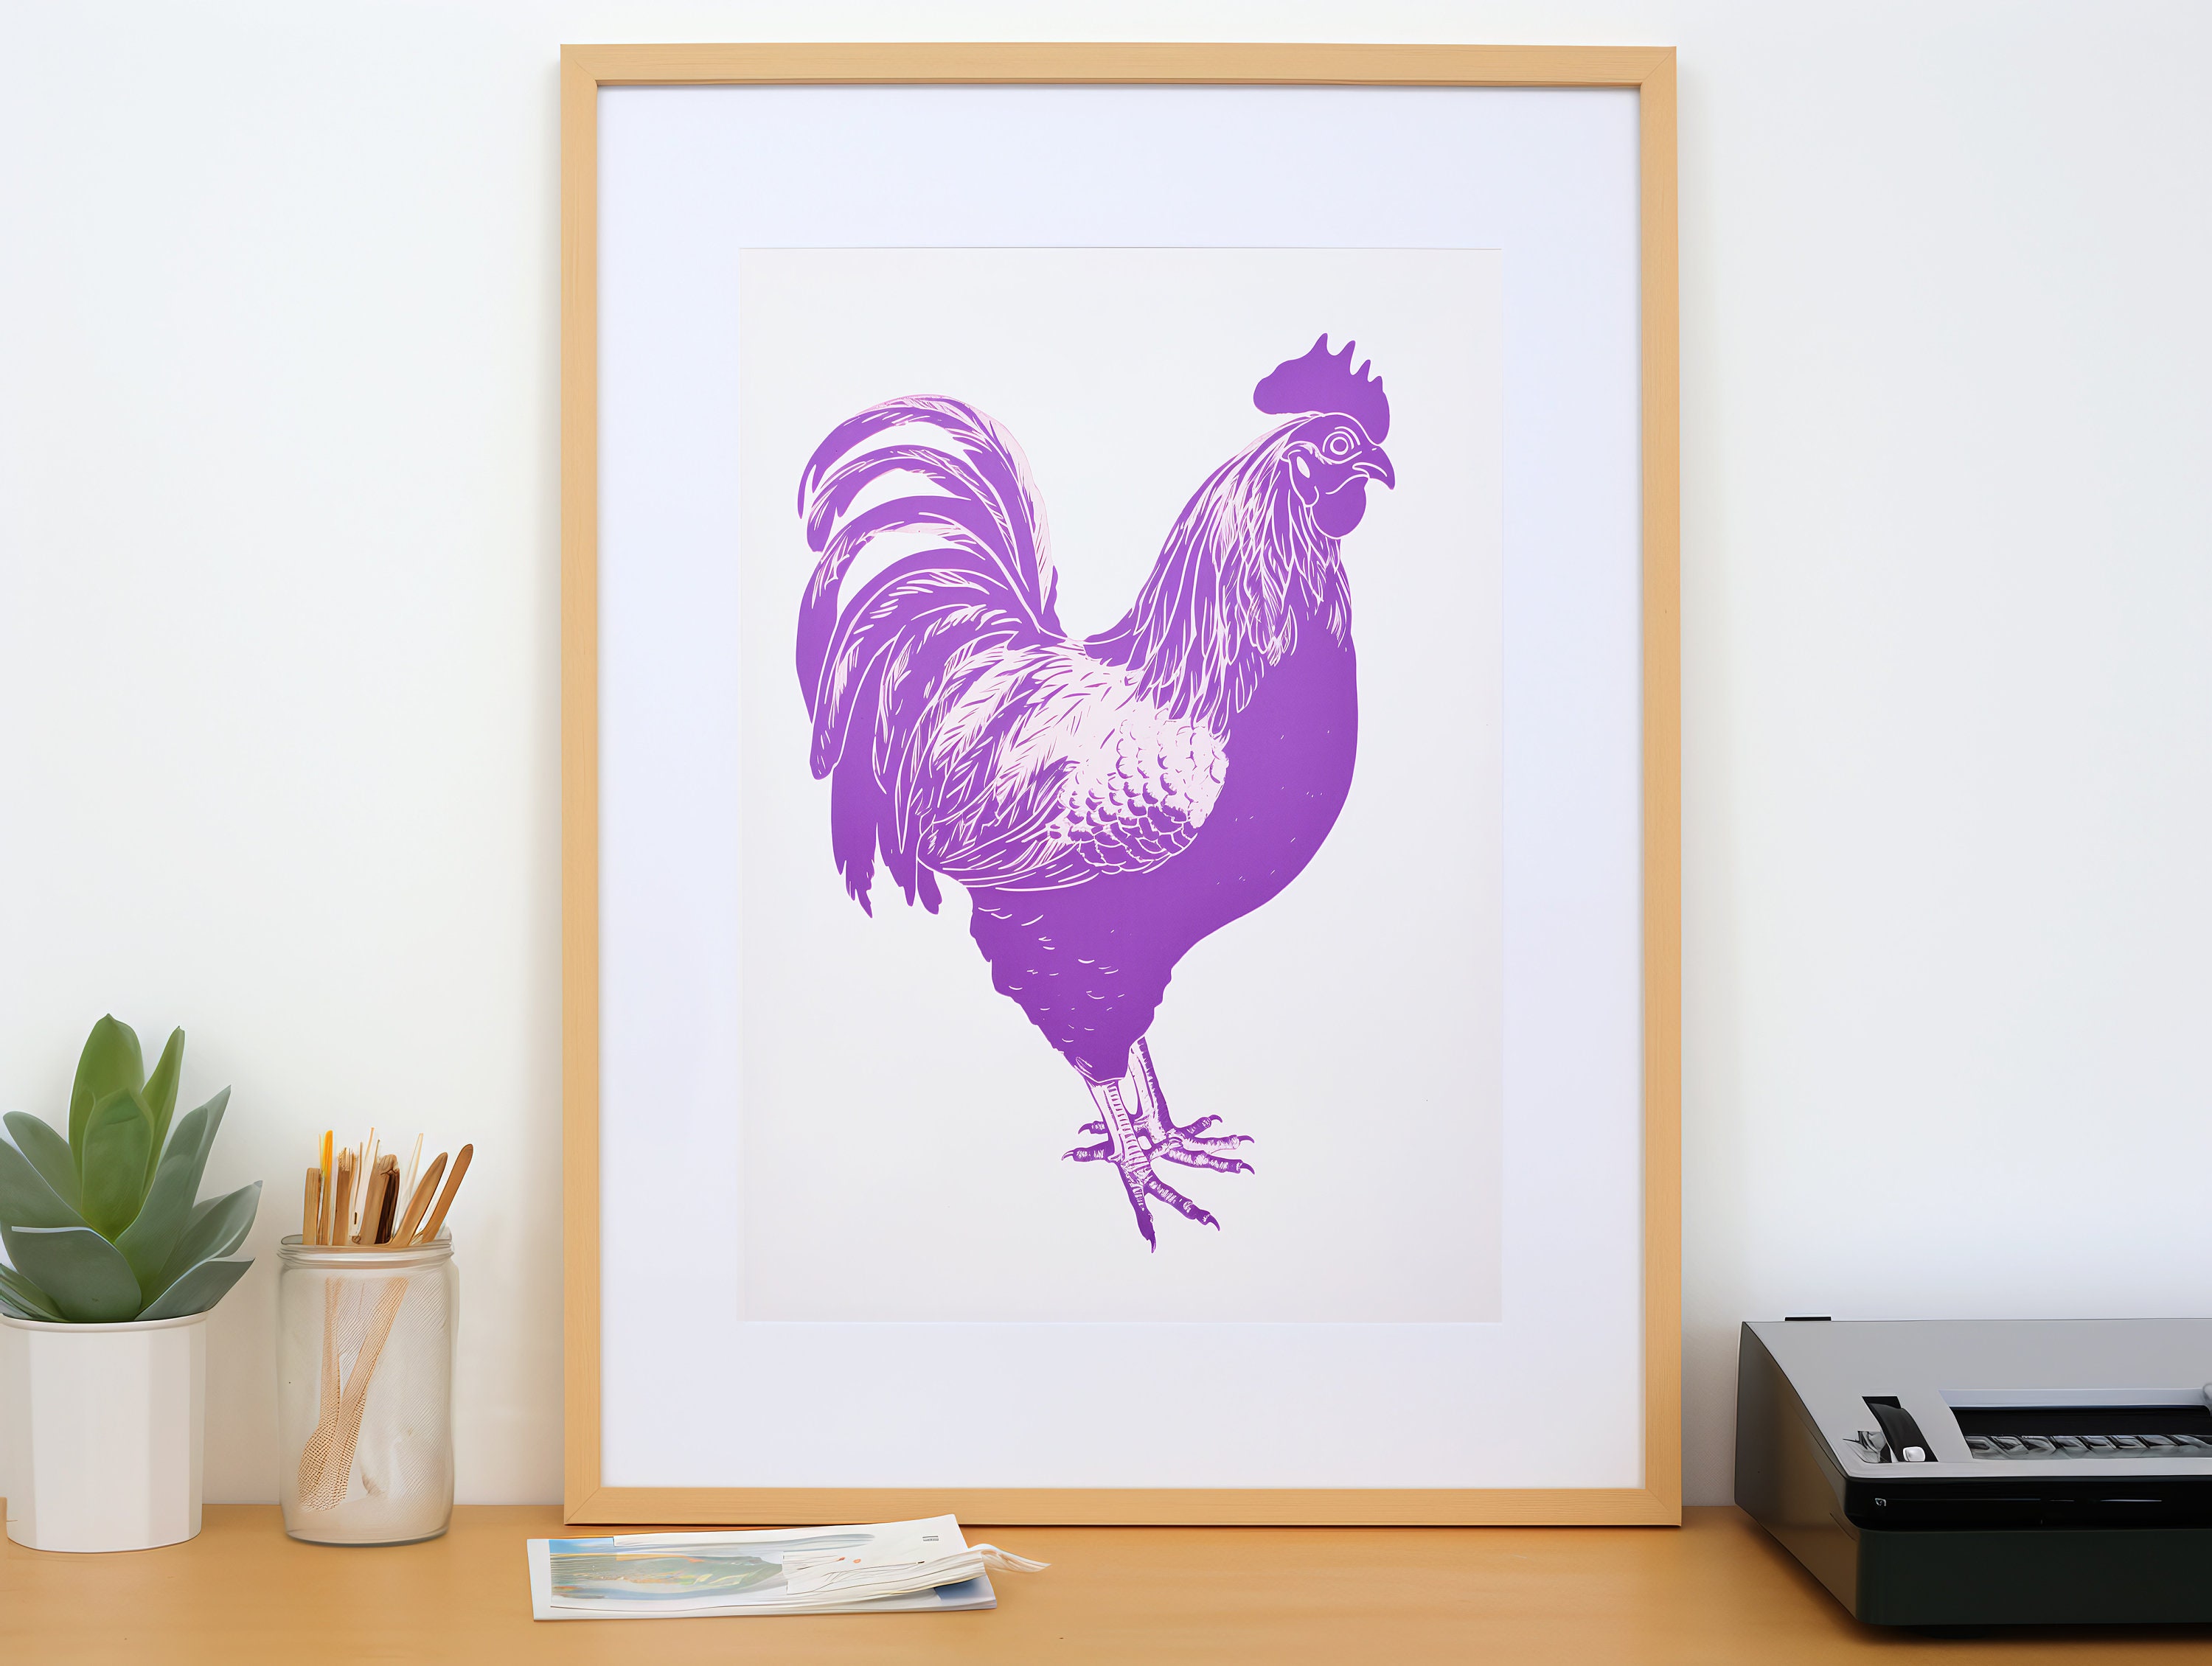 Community Chicken Finger Episode Digital Art Print Art 